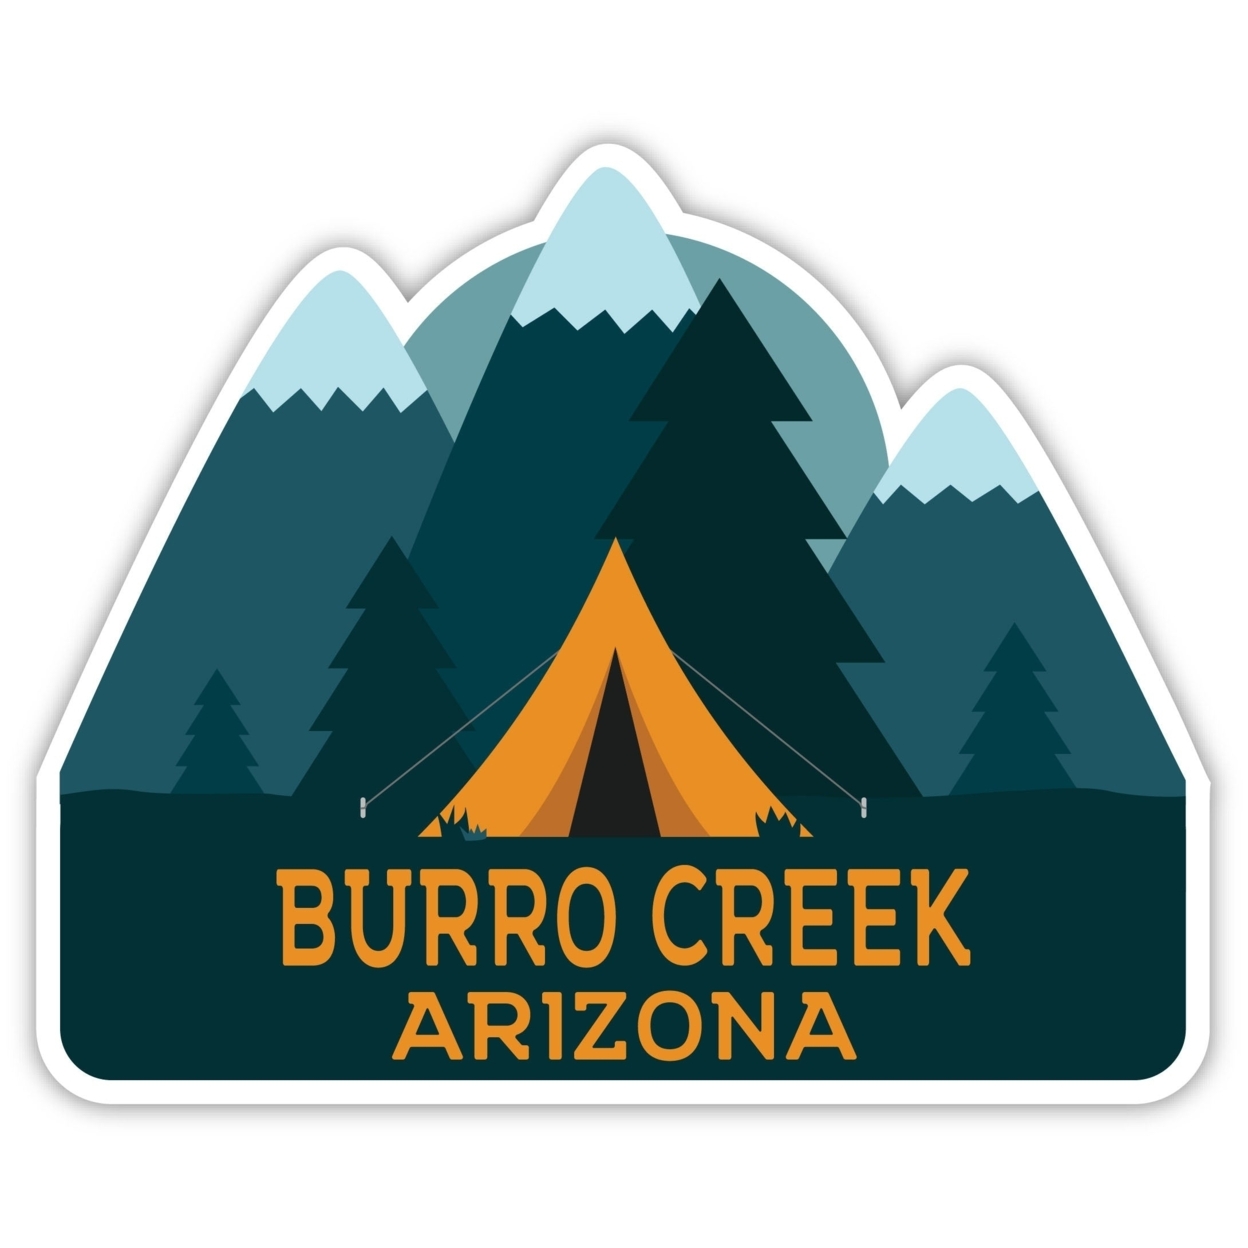 Burro Creek Arizona Souvenir Decorative Stickers (Choose Theme And Size) - 4-Pack, 4-Inch, Tent